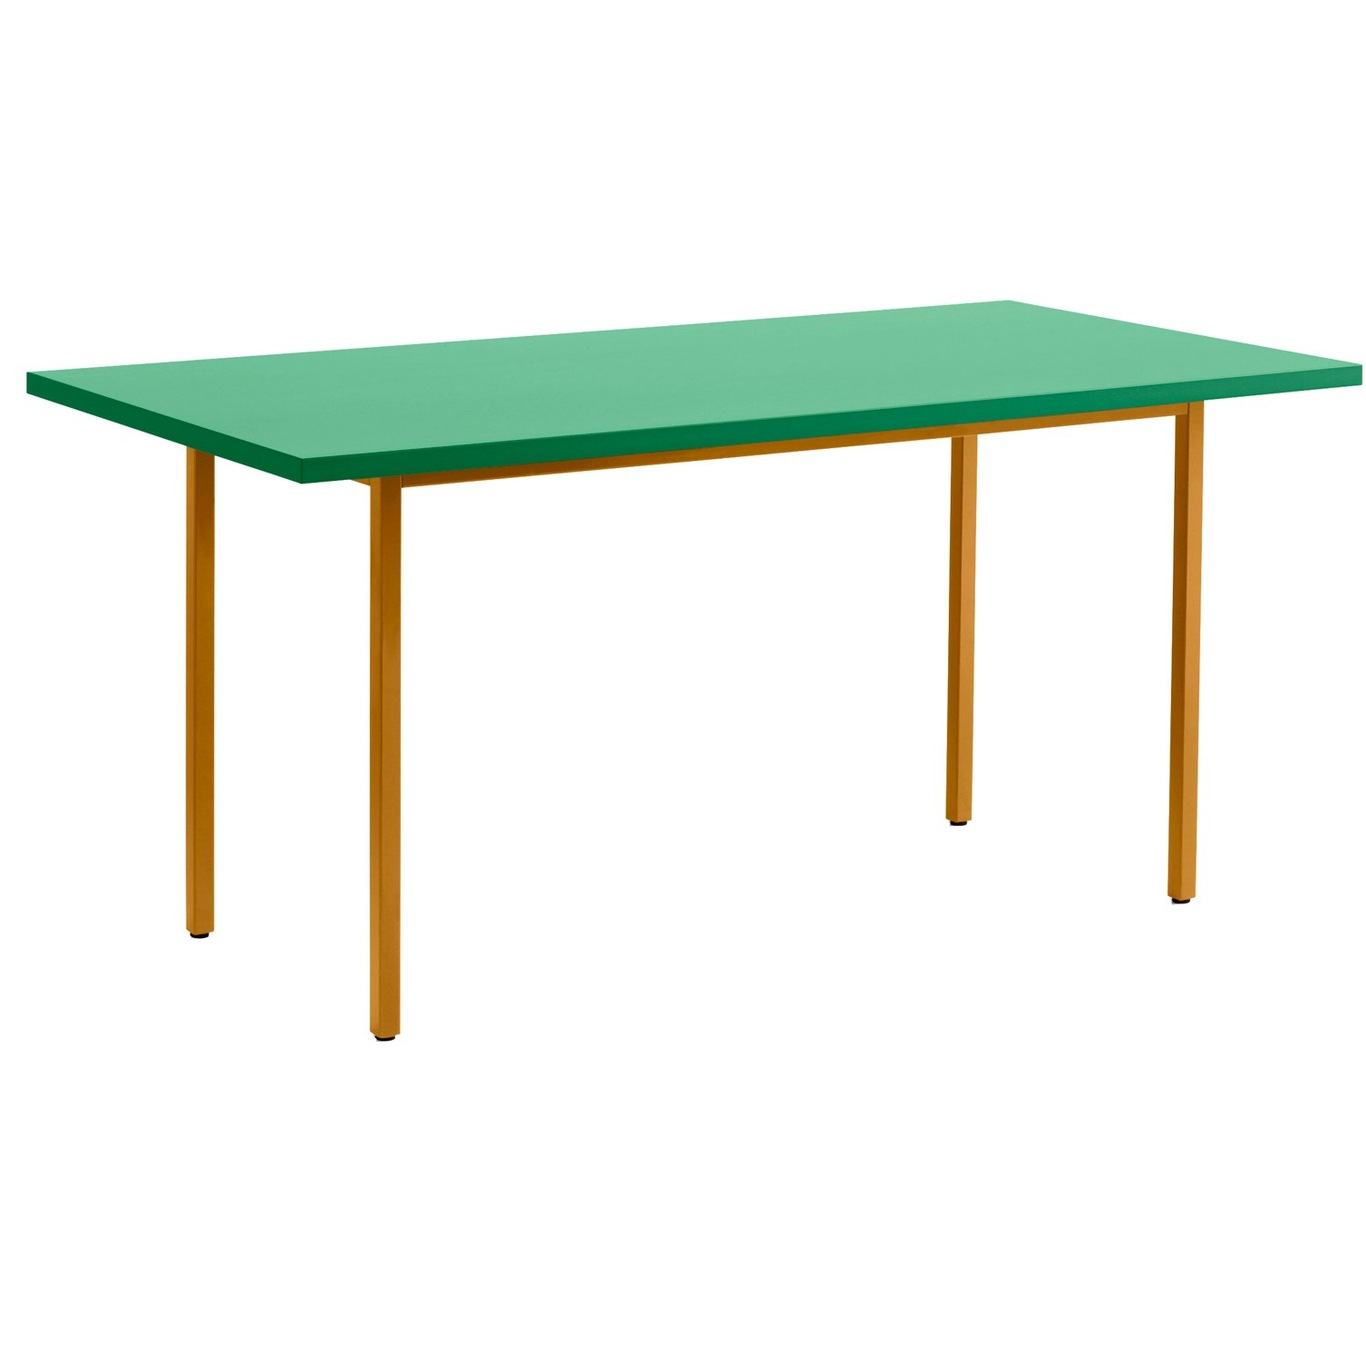 Two-Colour Pöytä 160x82 cm, Ochre / Green Mint